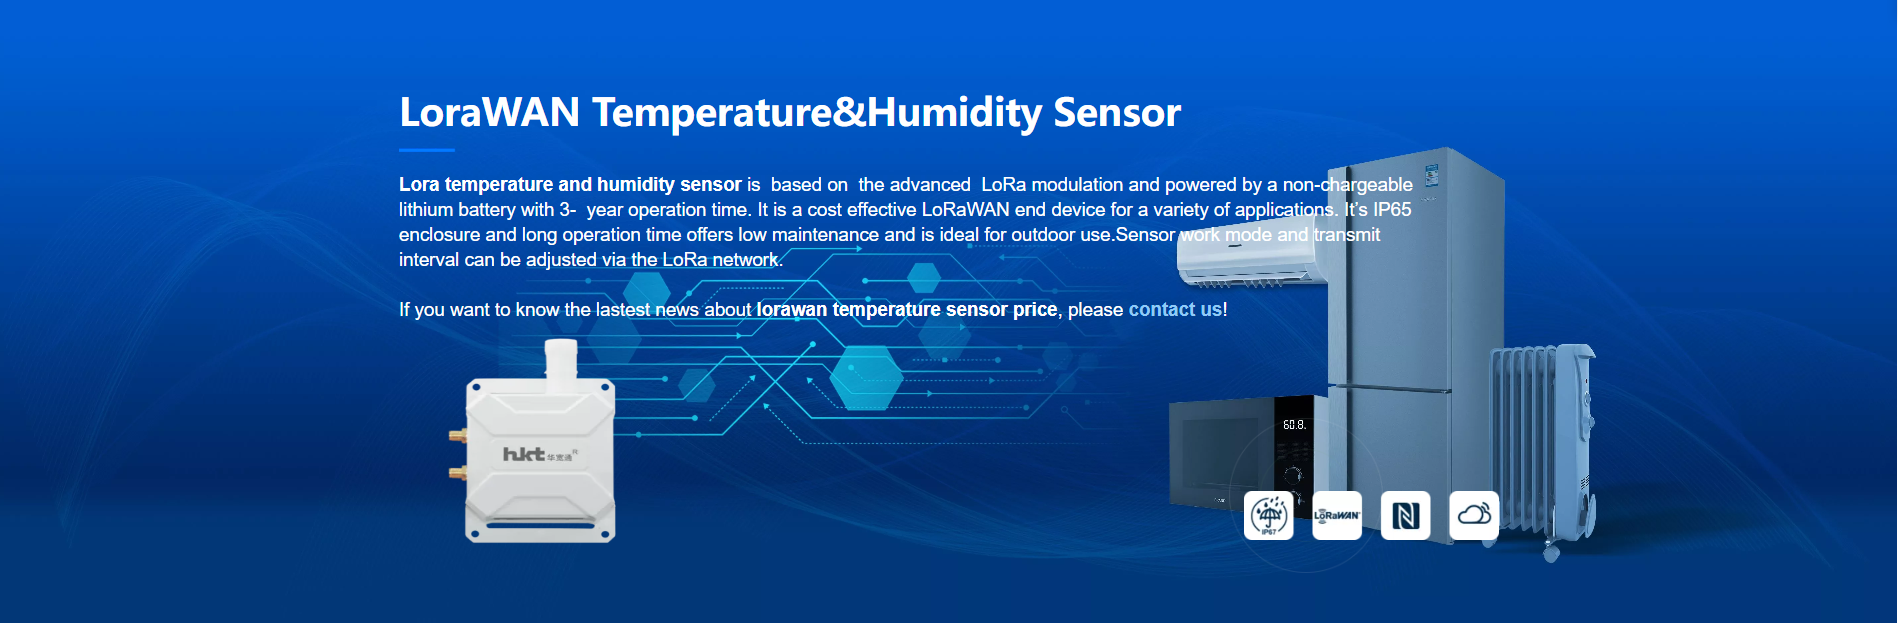 LoRaWAN Temperature and Humidity Sensor Solution for Environmental